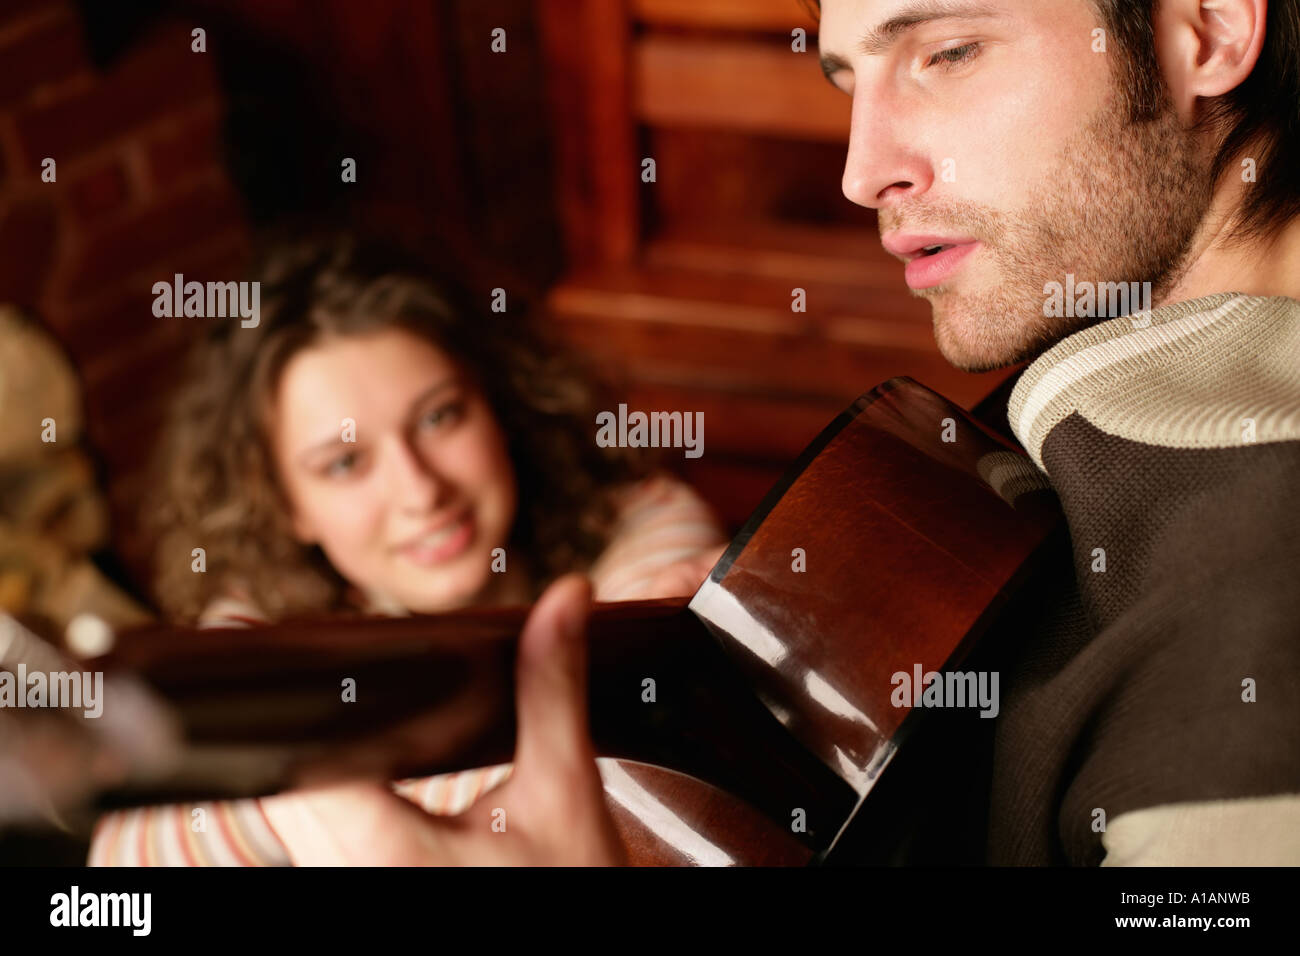 Woman listening to man play guitar Stock Photo